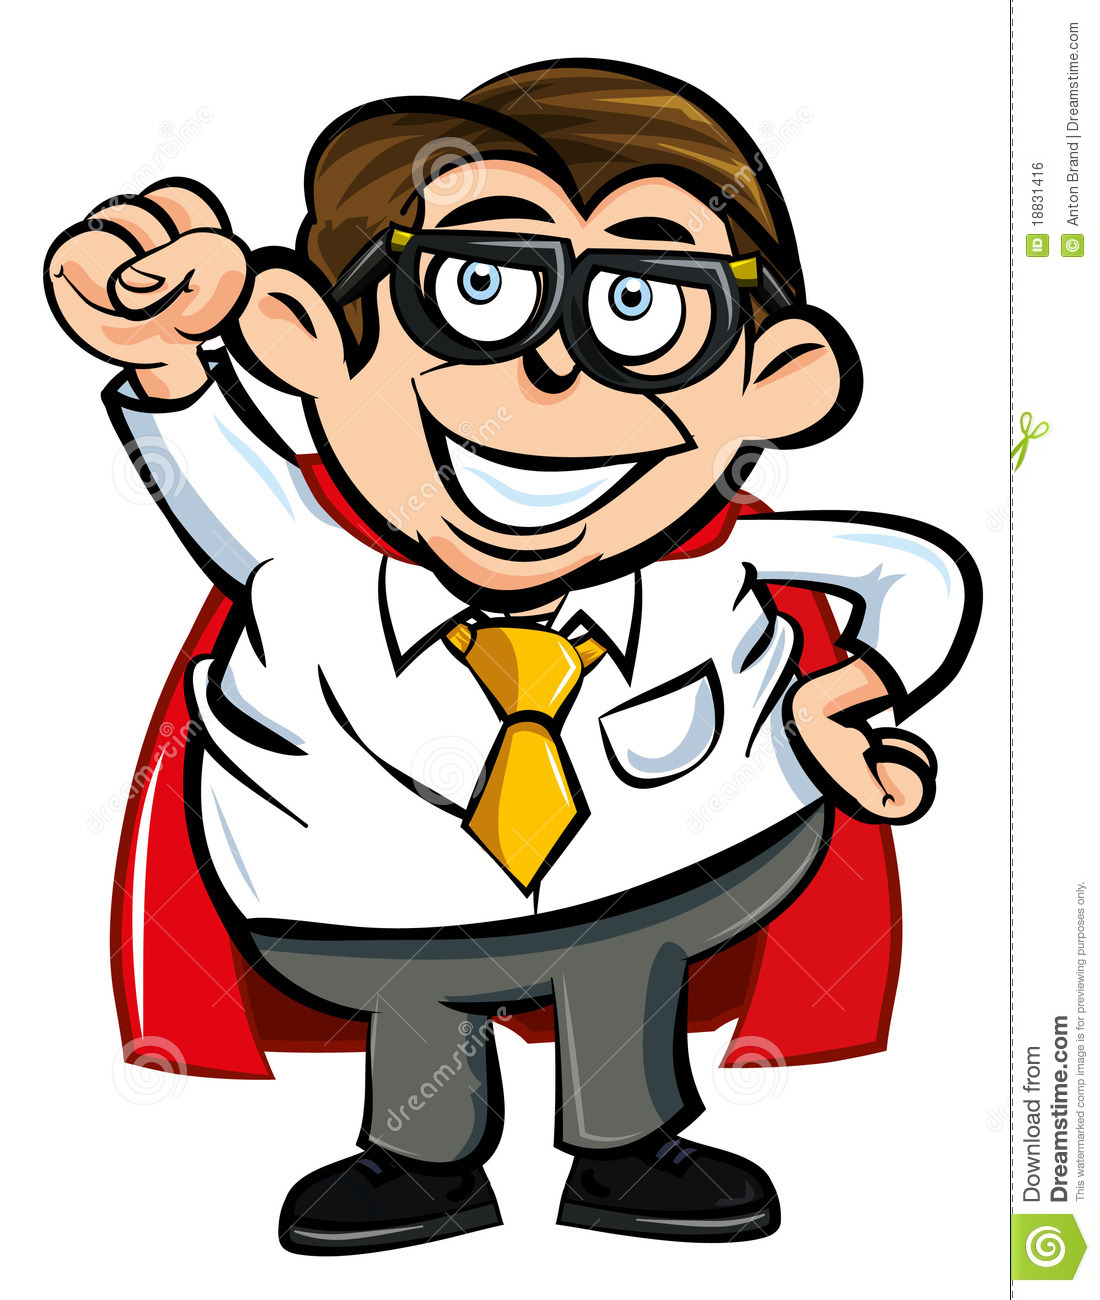 Cartoon Superhero Office Nerd Royalty Free Stock Image   Image    